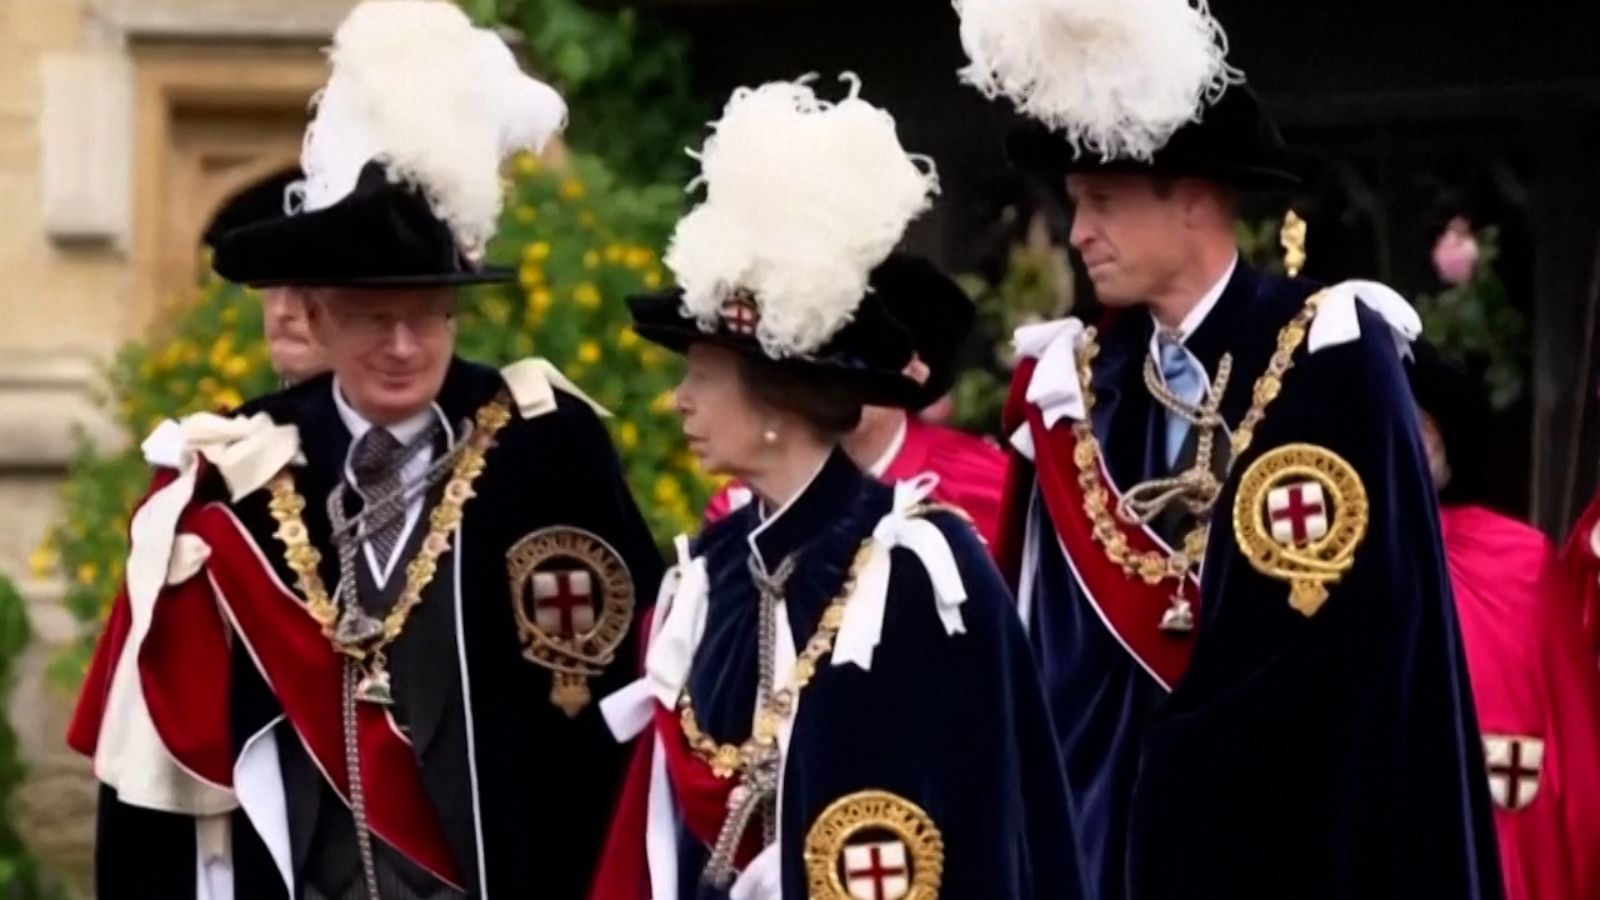 Royal family attends Garter Day service at Windsor Castle Good